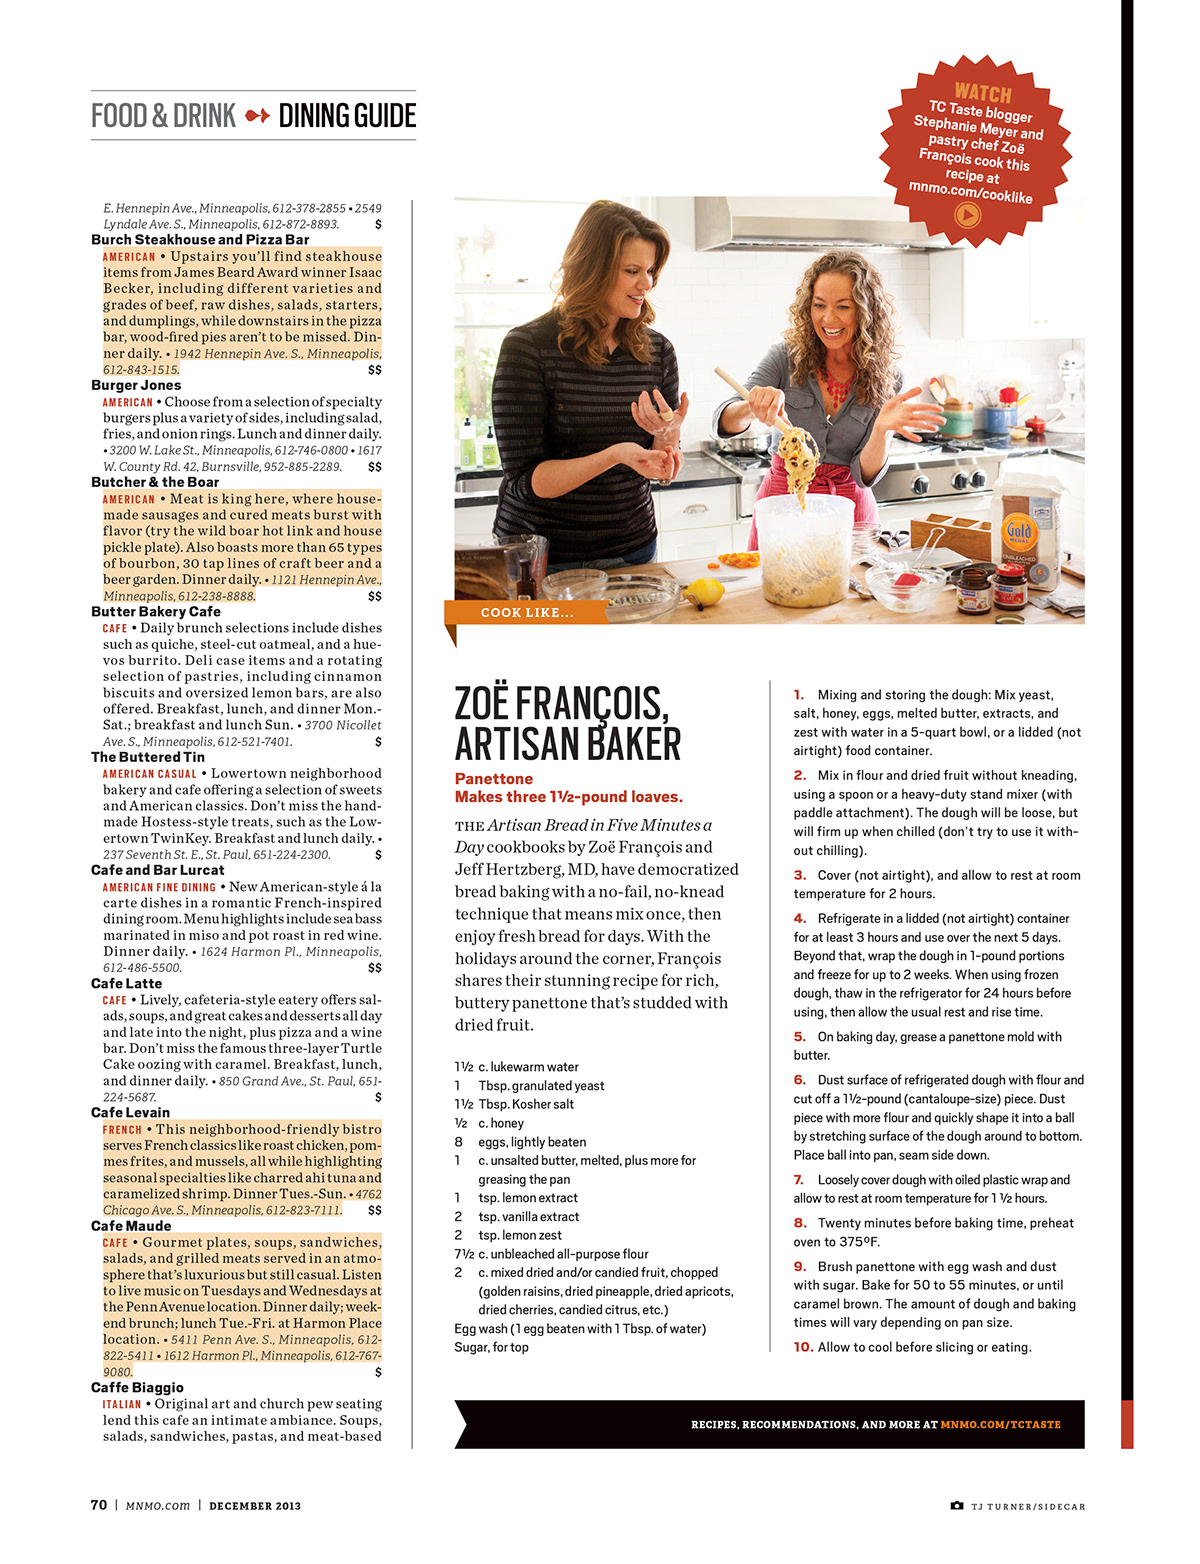 Minnesota Monthly magazine soap cook recipe